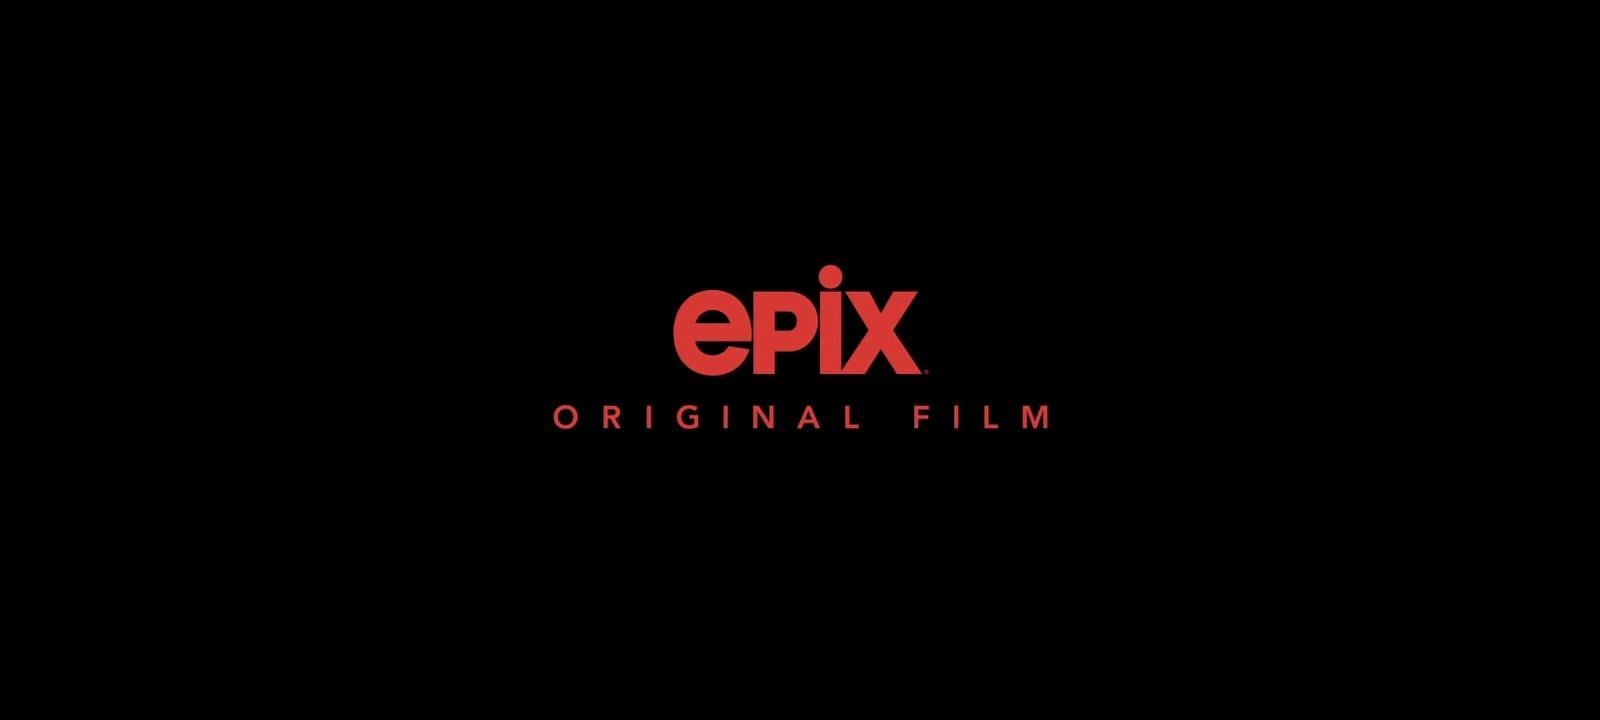 eThe Deep House is an ePix original film (Image via Paramount Movies)